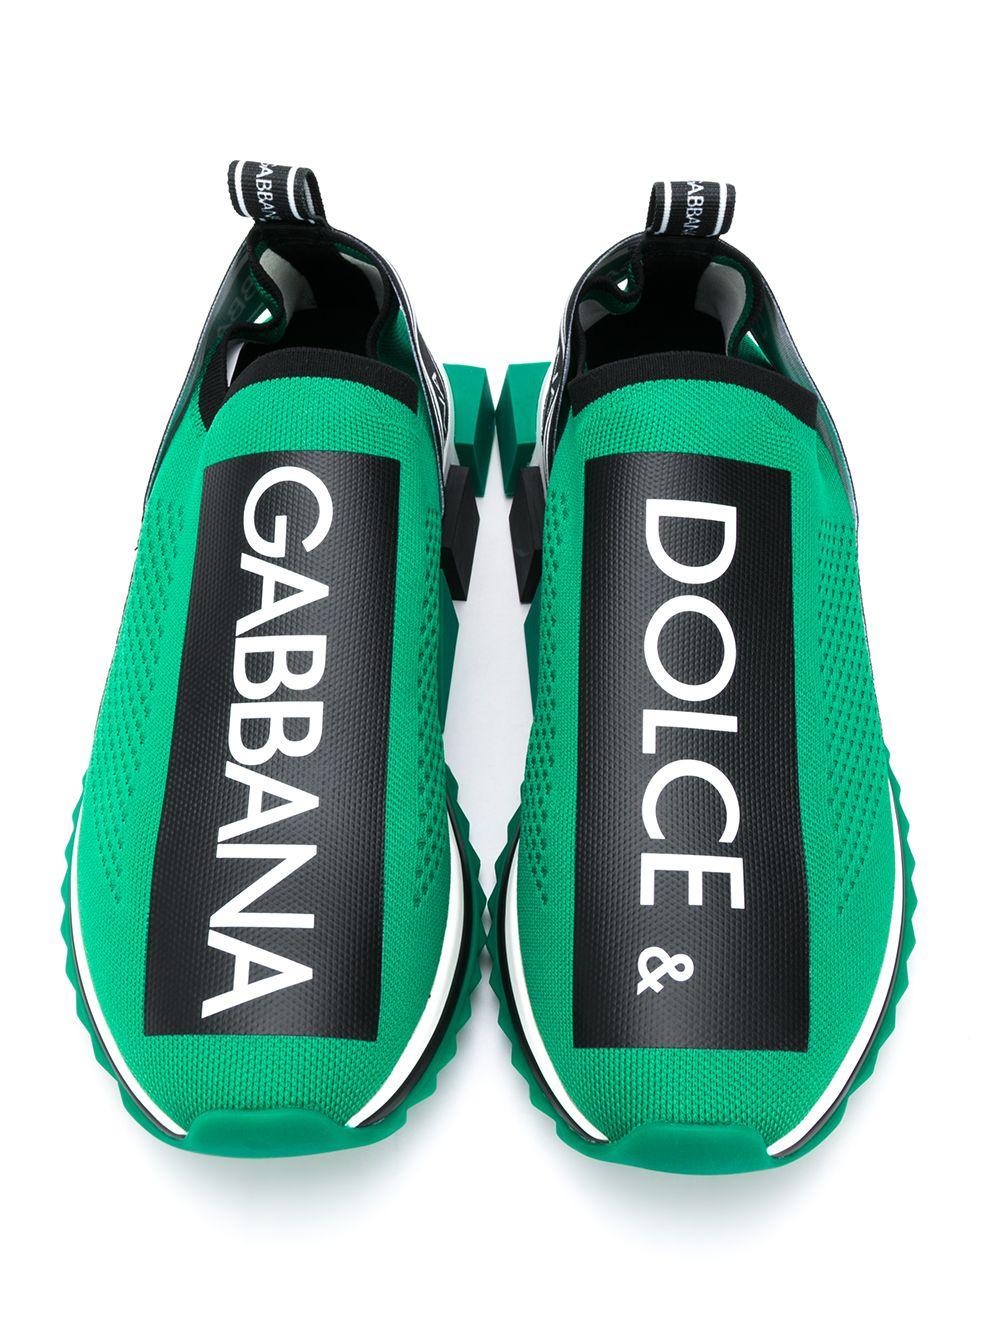 Dolce & Gabbana Rubber Sorrento Low-top Sneakers in Green for Men - Lyst